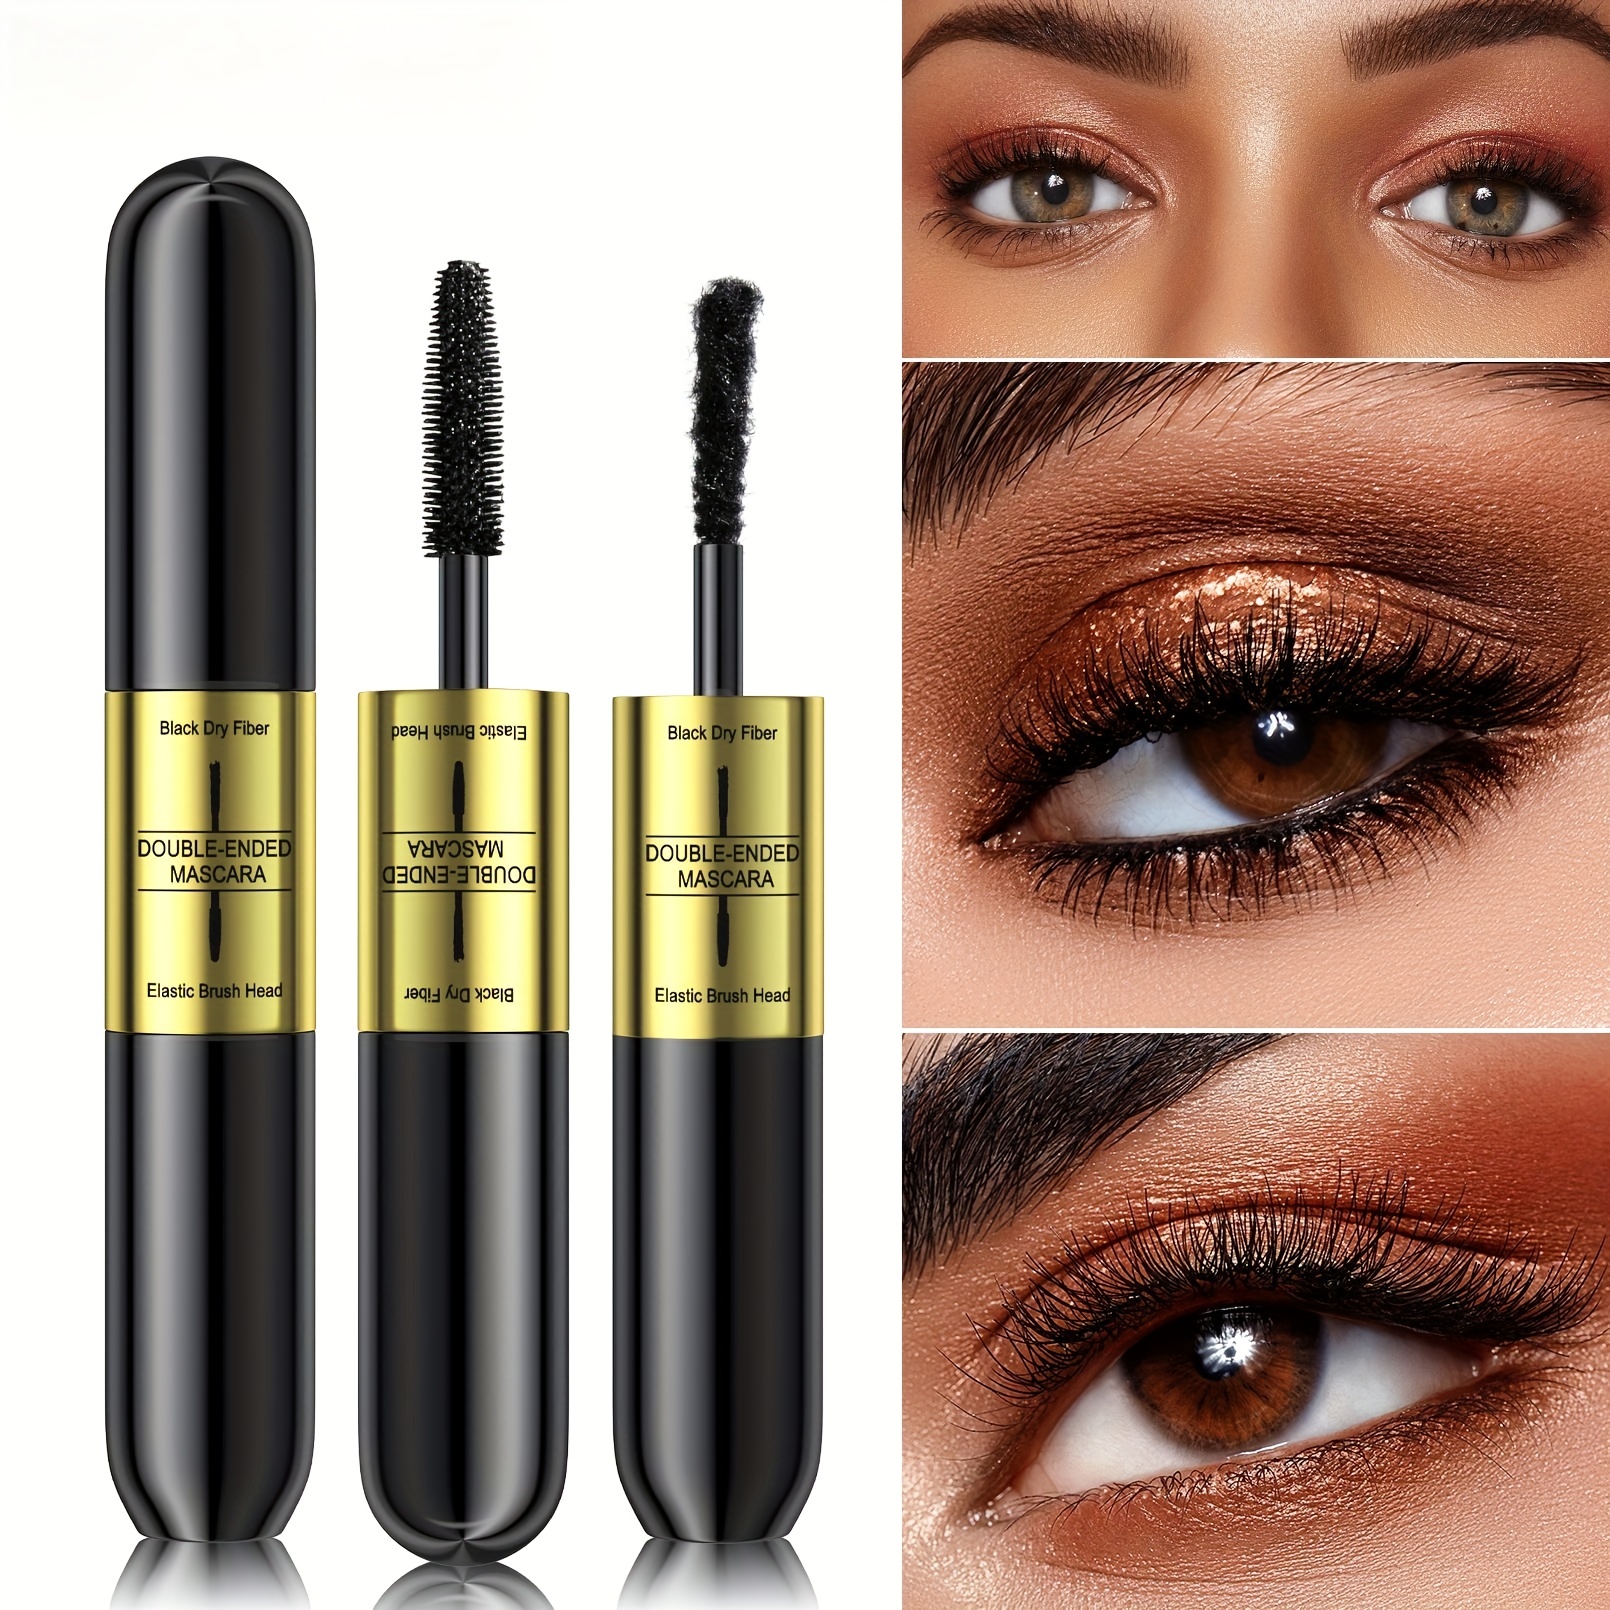 

Ultra Black Volume Mascara With Fiber Lashes - Waterproof, Long-lasting, Smudge-proof Eyelashes Makeup